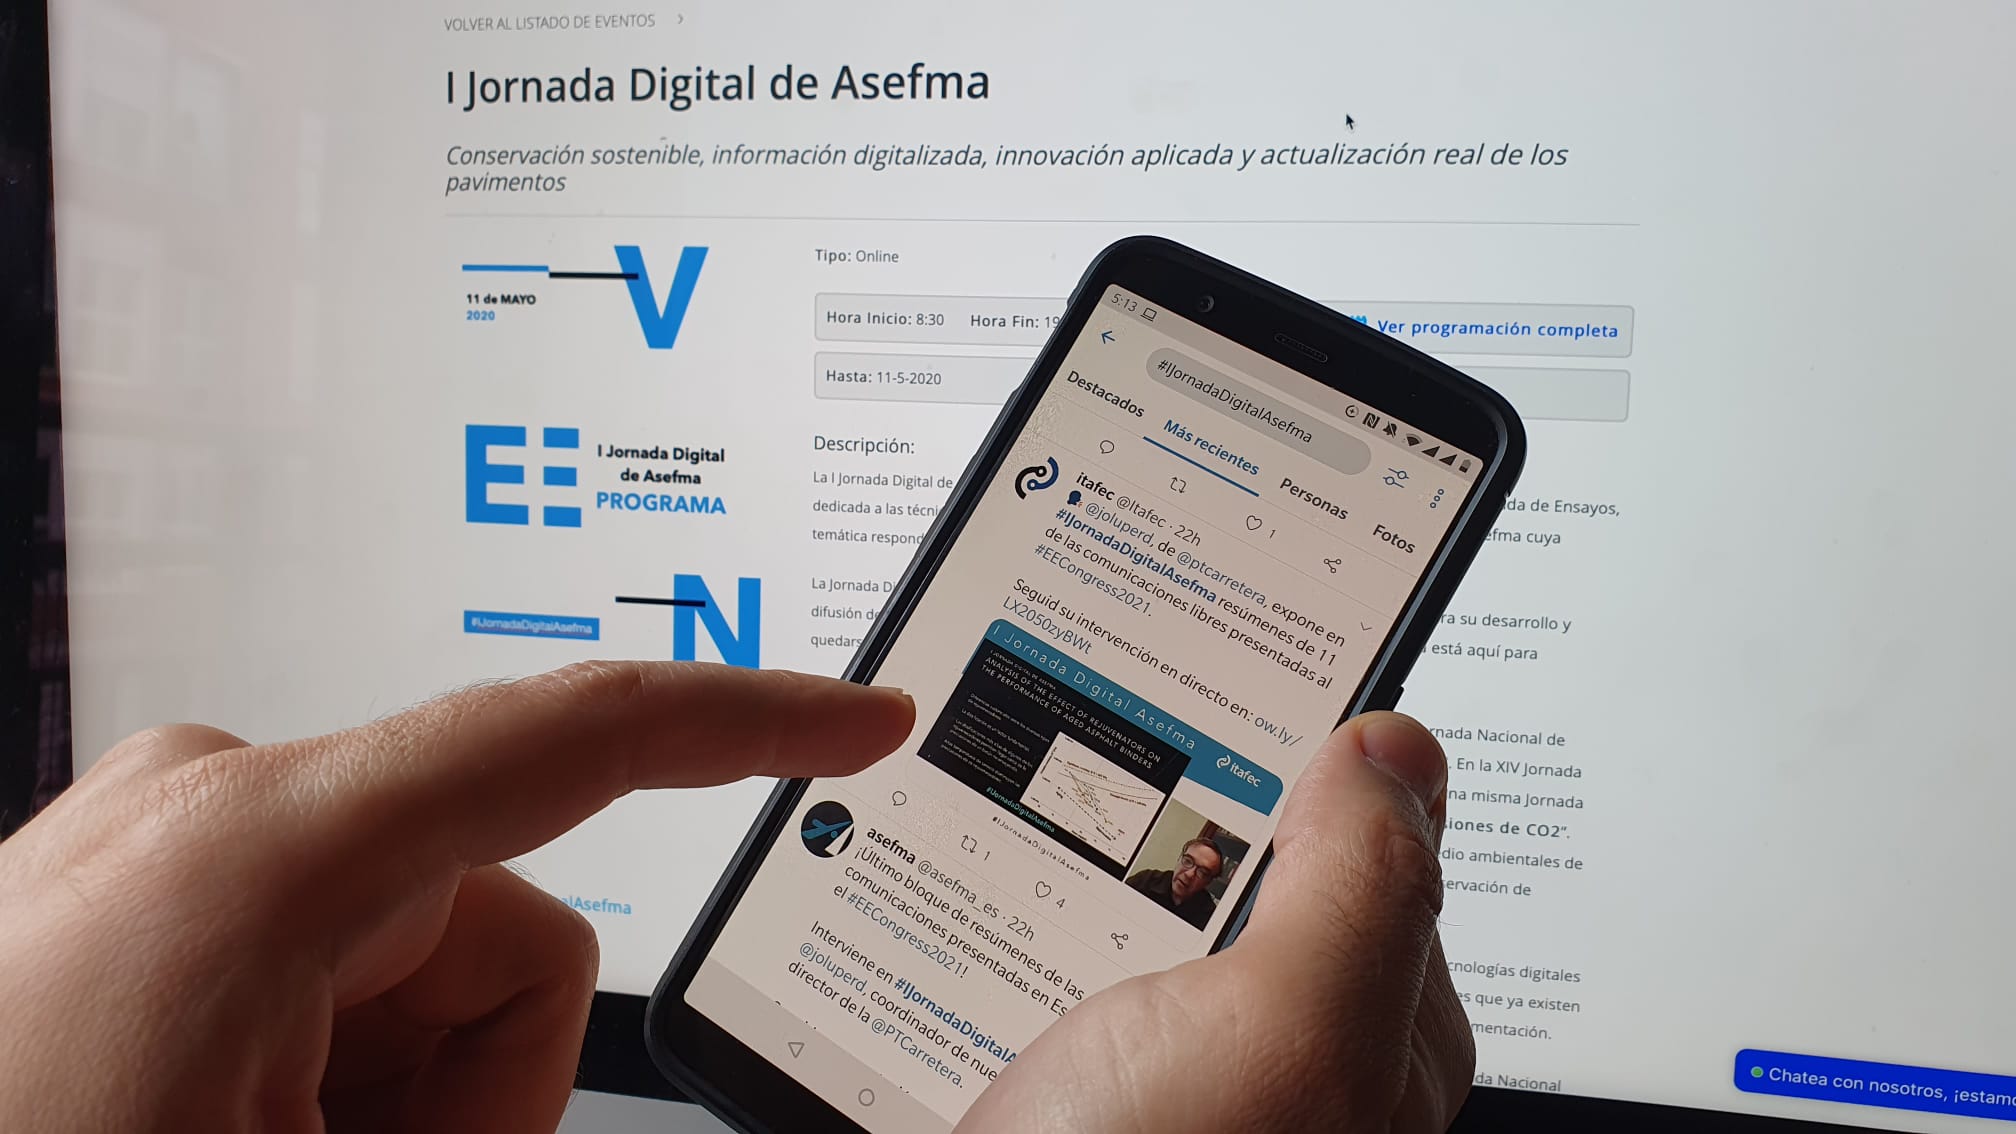 La primera jornada digital de ASEFMA #IJornadaDigitalAsefma registra una audiencia superior a 516 mil usuarios